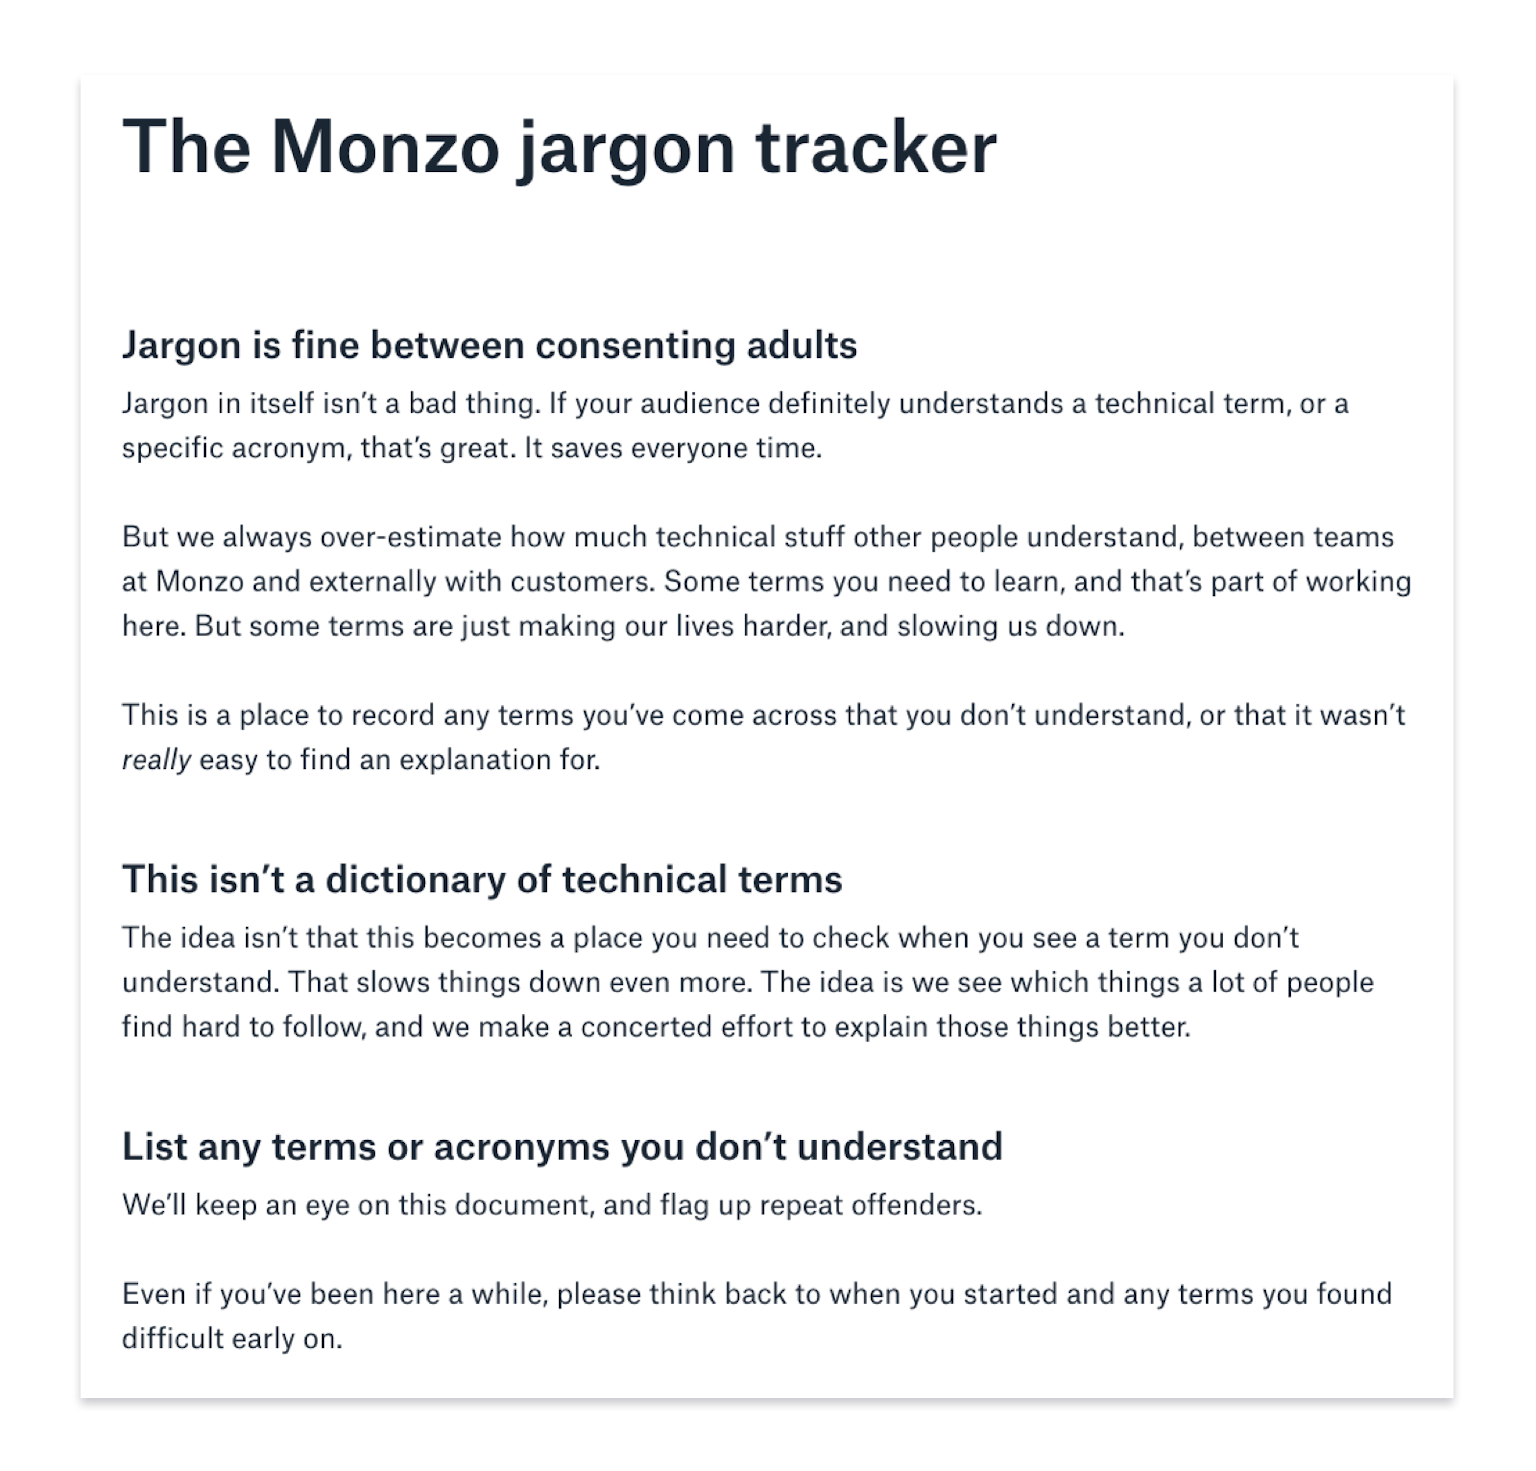 Monzo jargon tracker